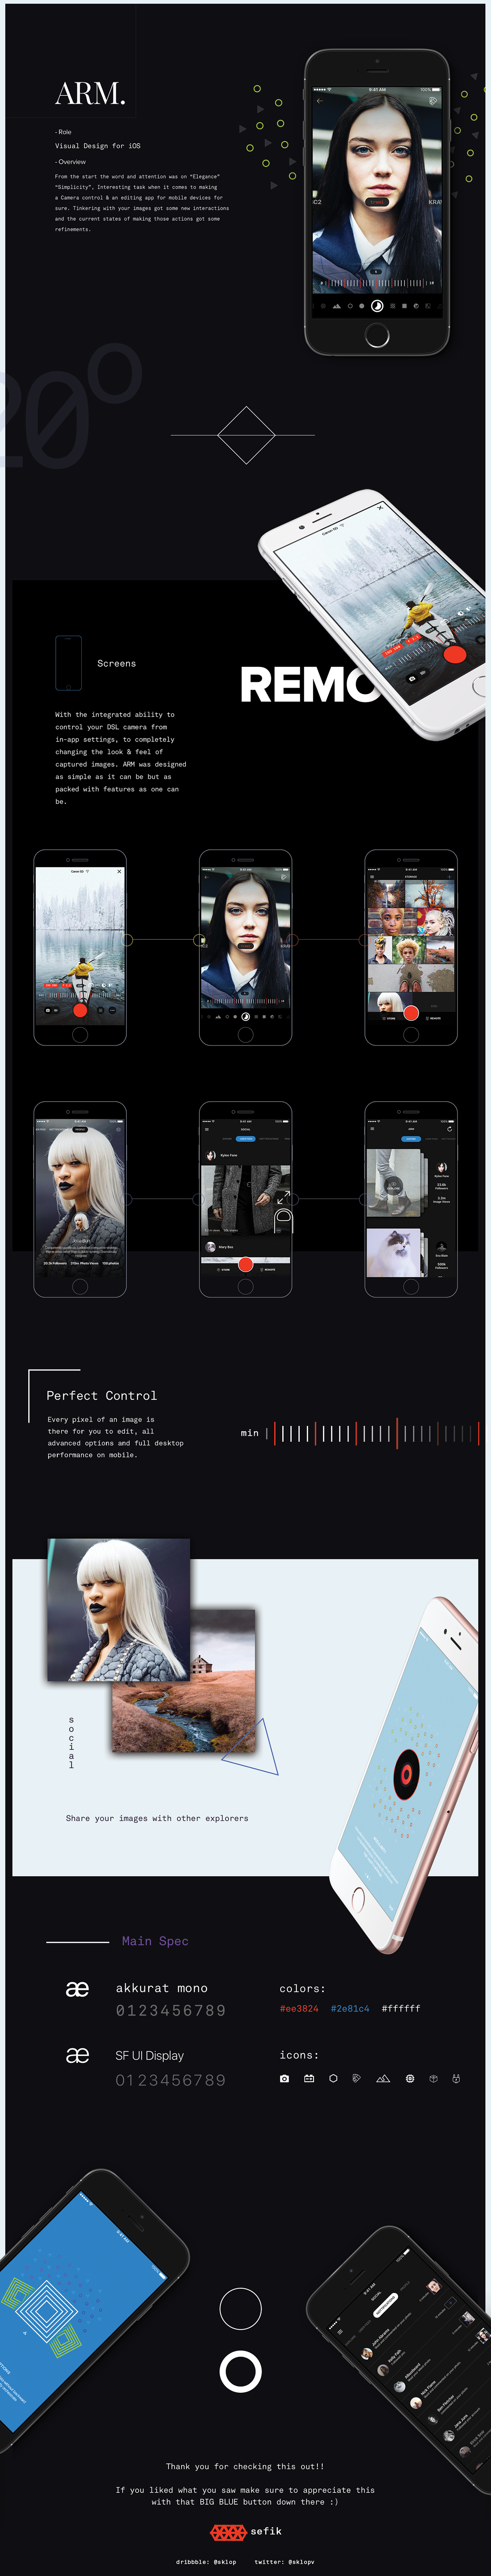 camera fashion app capture image Editing  ios iOS design gallery photo modern Style simple iphone app Social app